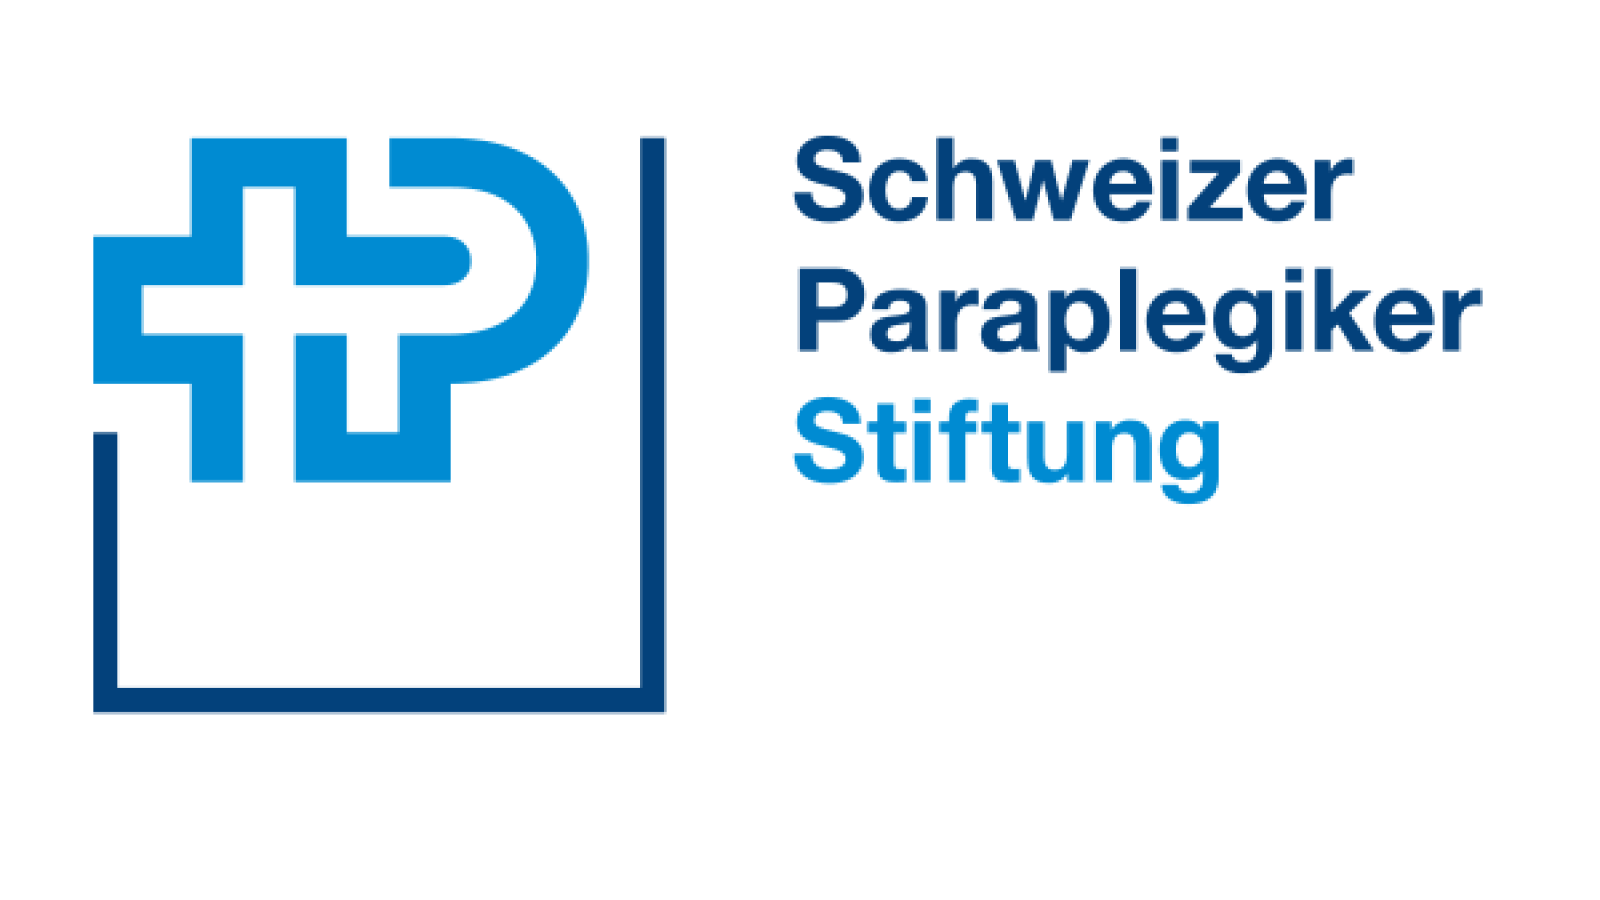 Fondazione Svizzera per Paraplegici